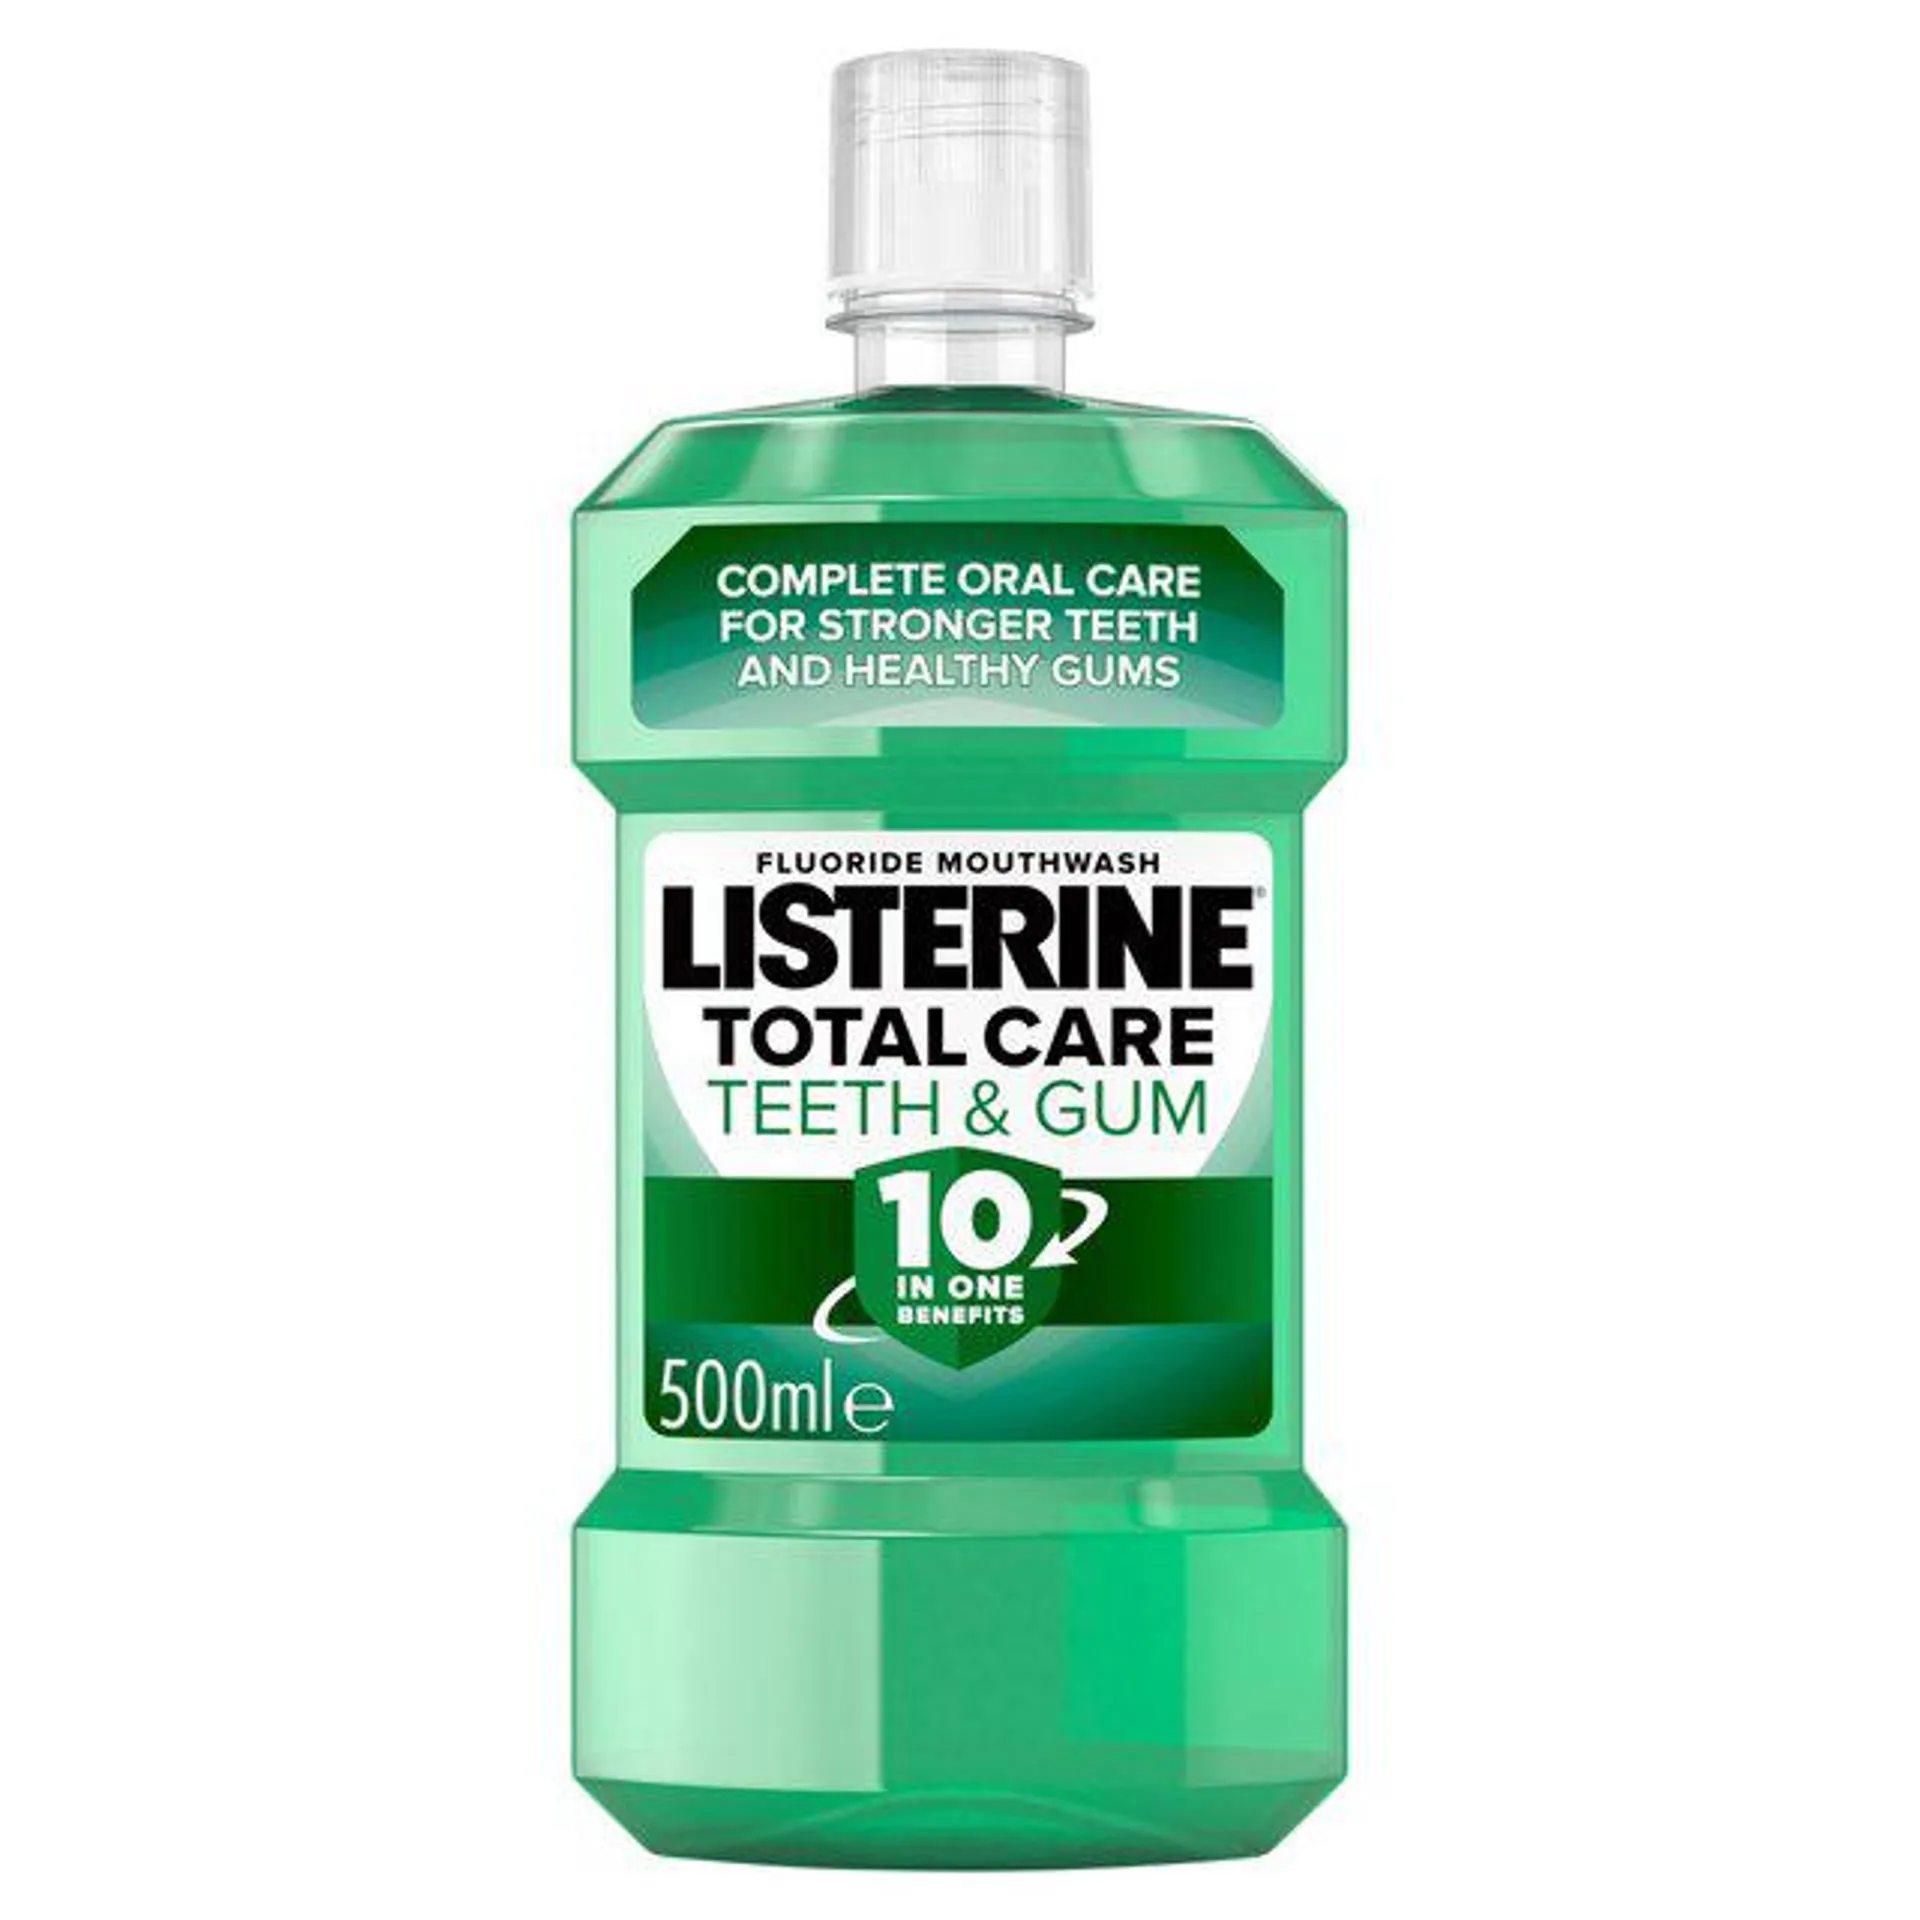 Listerine Total Care Teeth & Gum Mouthwash 500ml